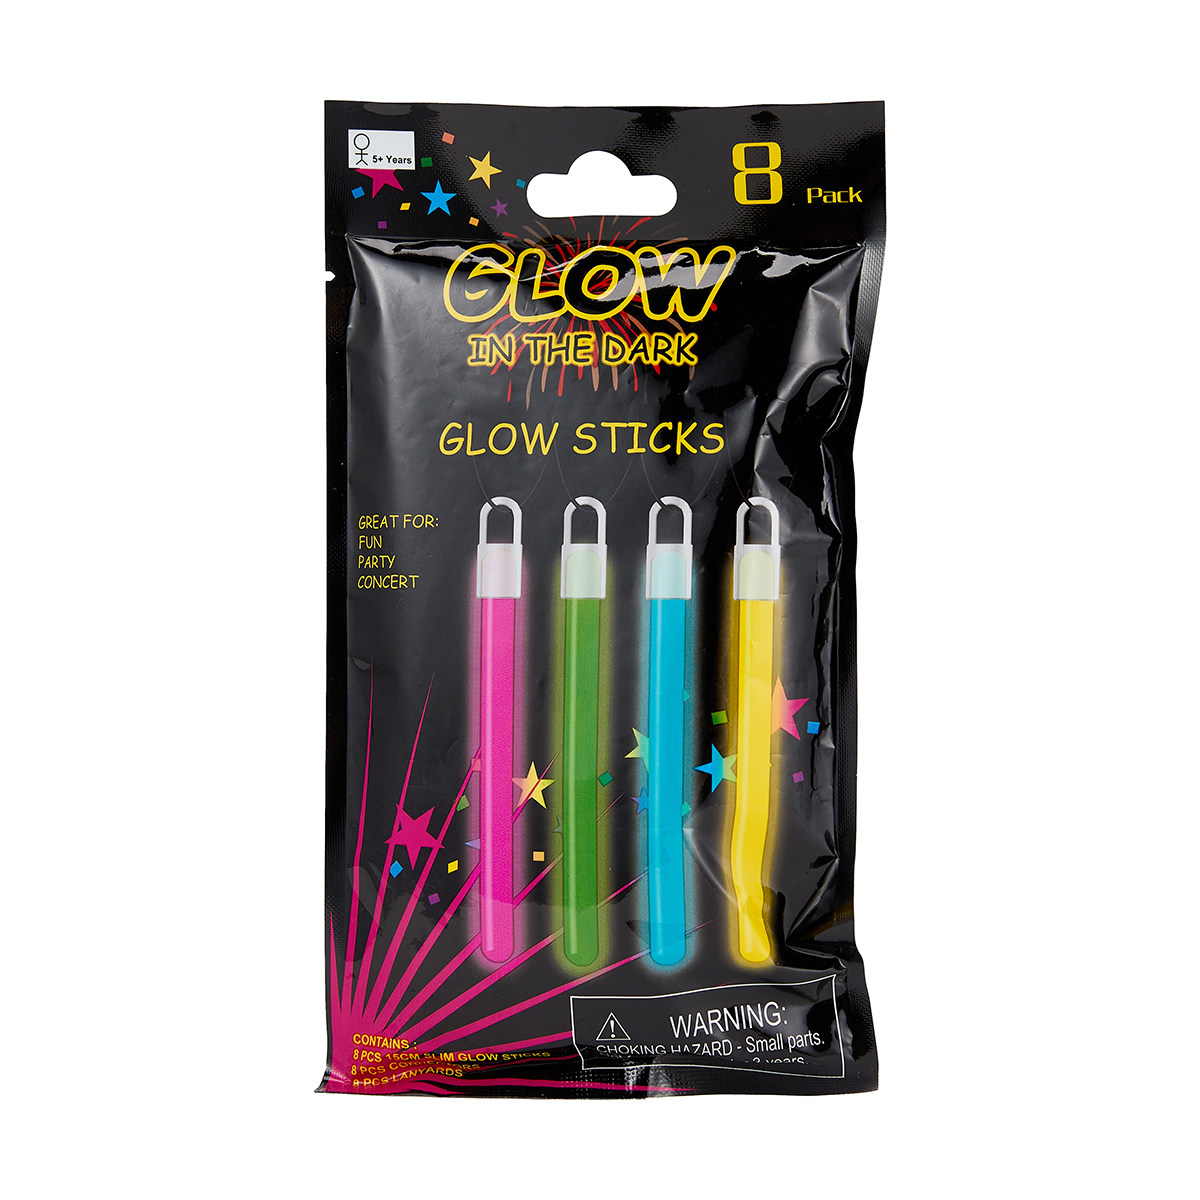 8 Pack Glow Sticks